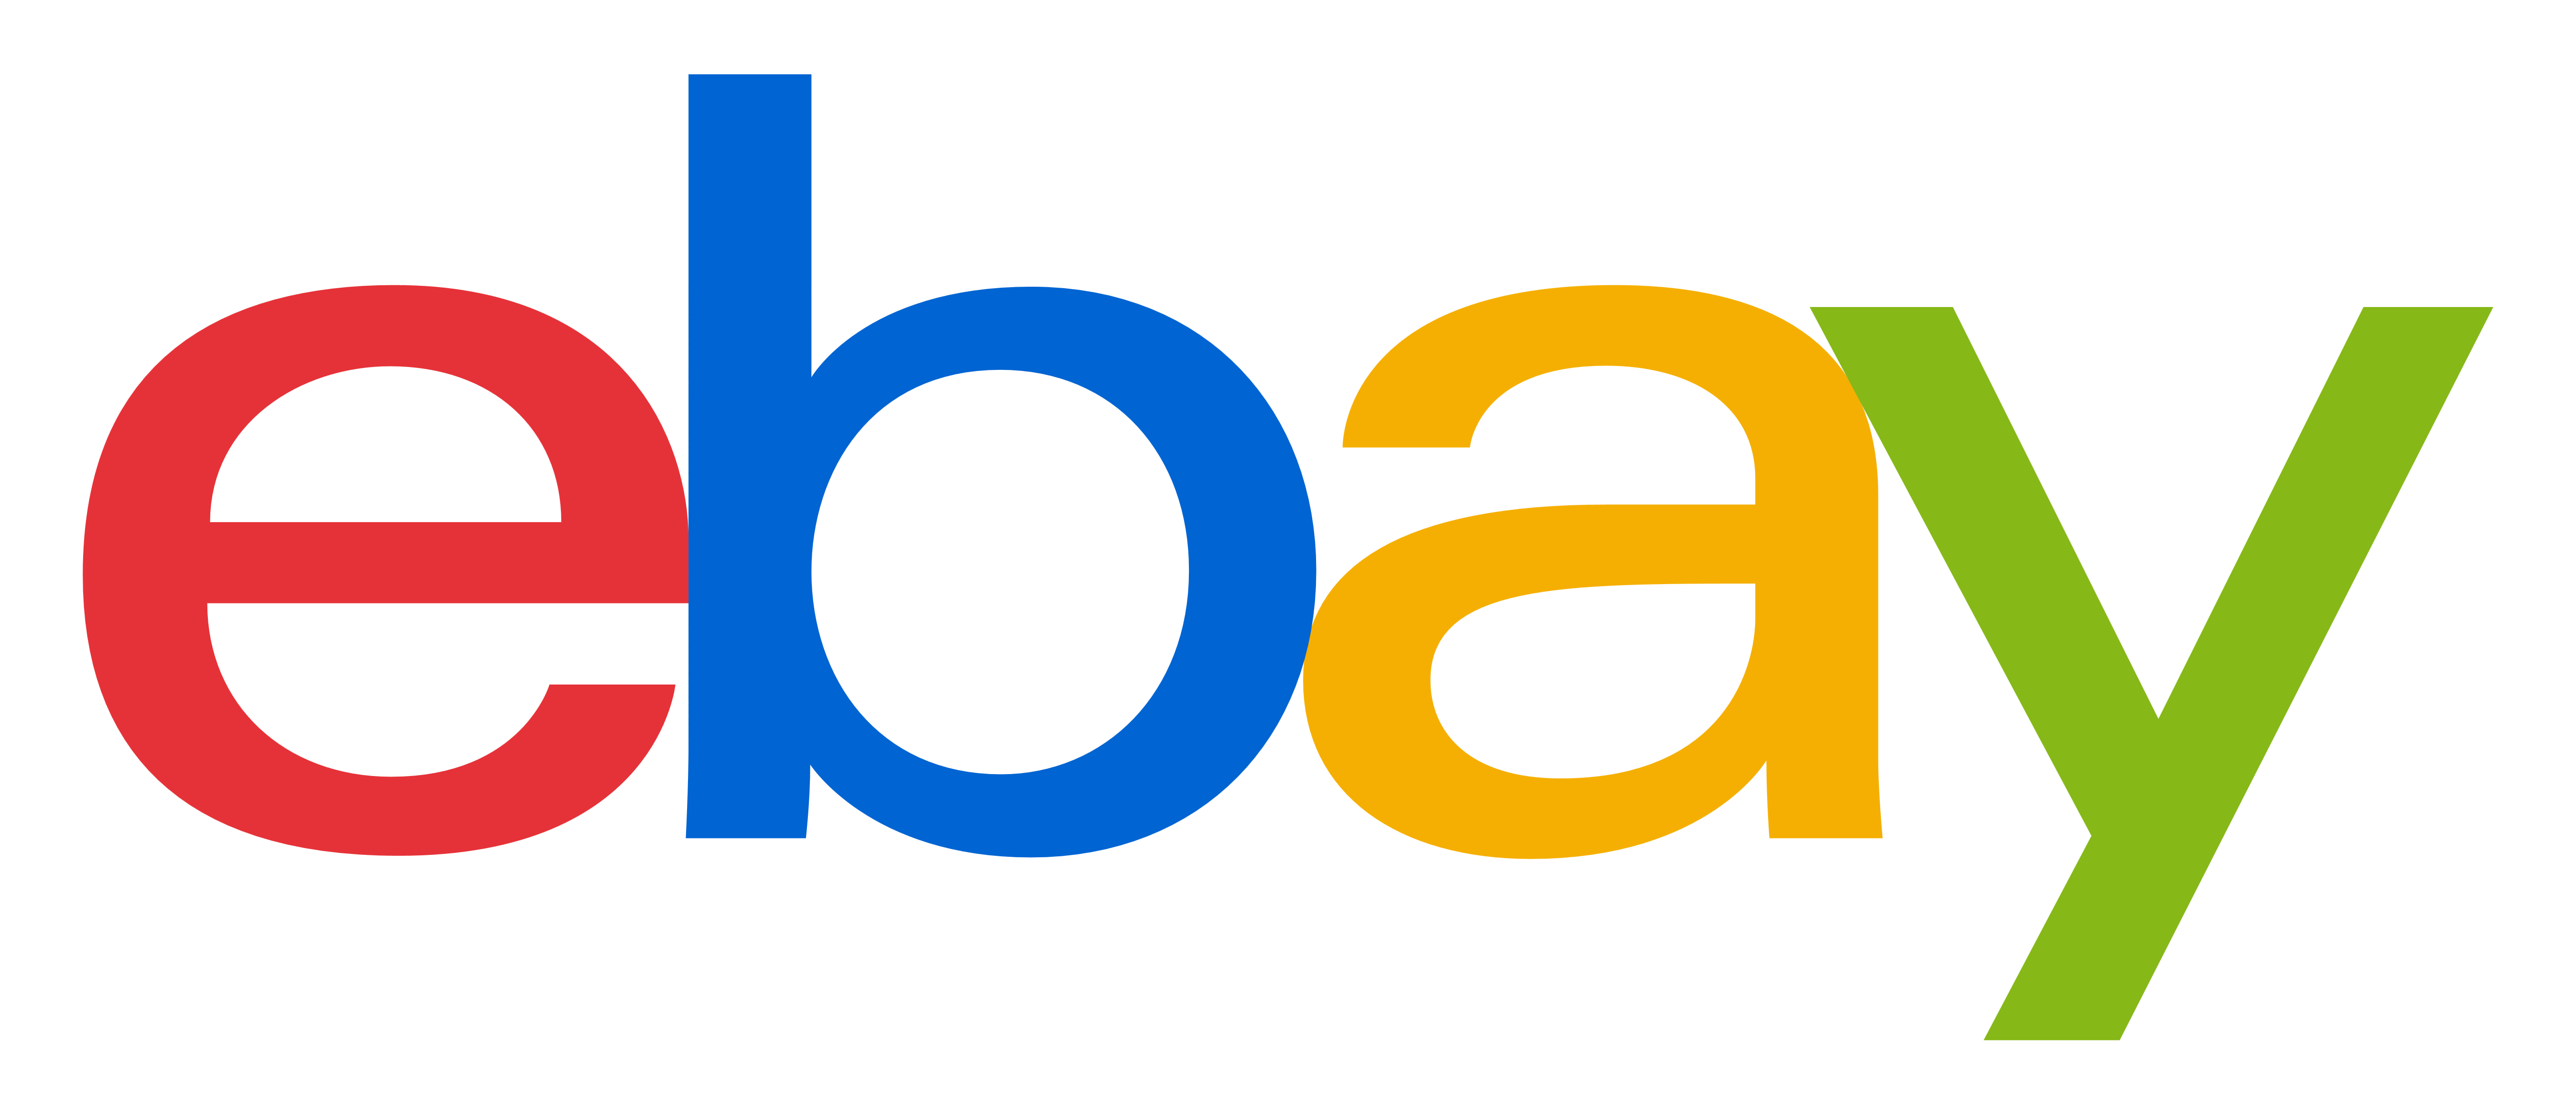 Logo de eBay imágenes Transparentes